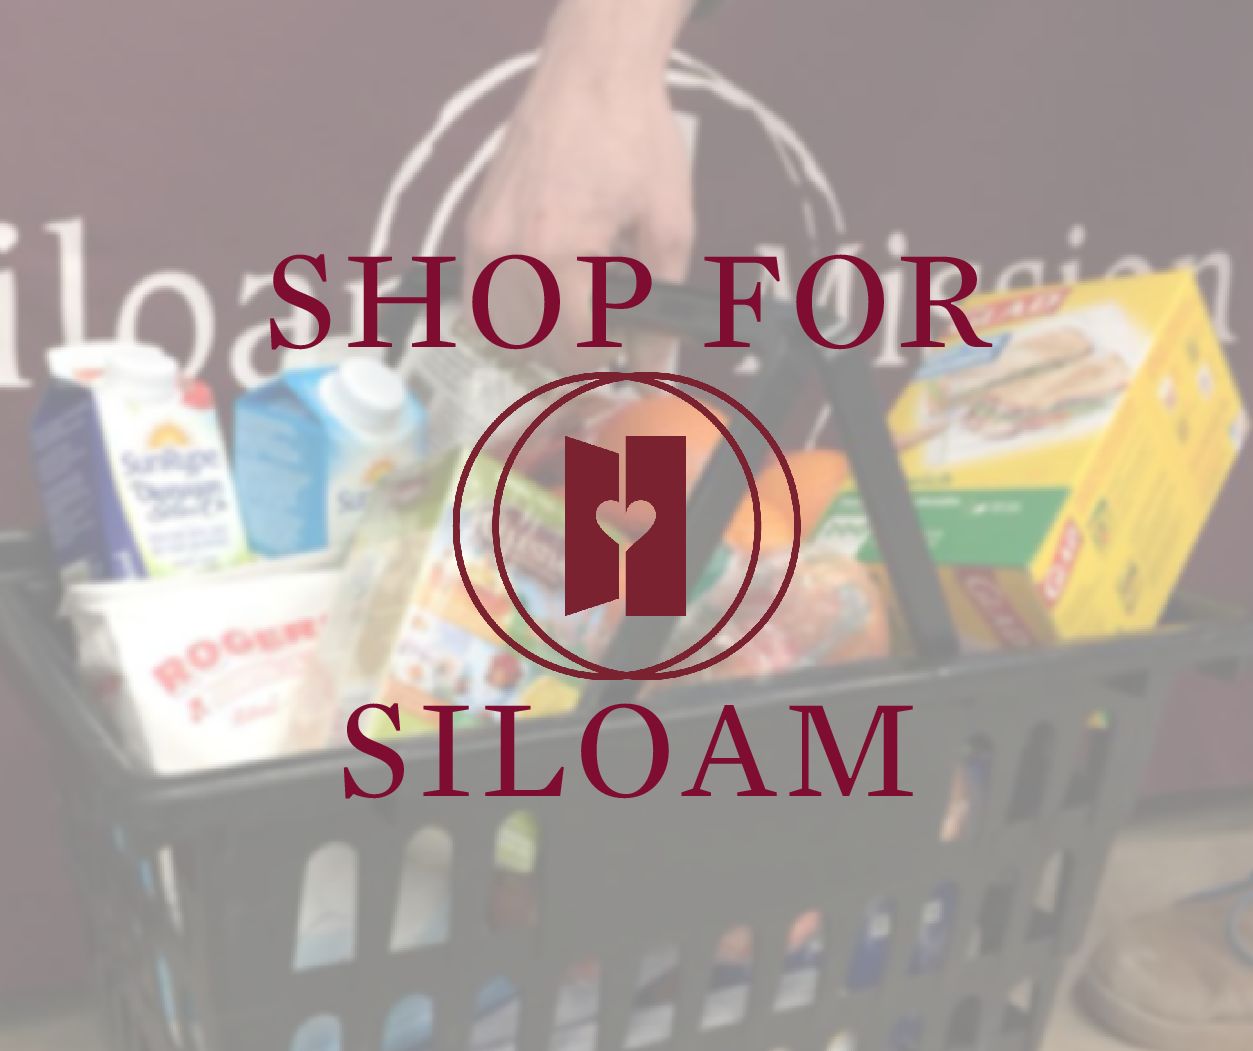 Kildonan Place on X: THURSDAY: Siloam Mission needs donations of